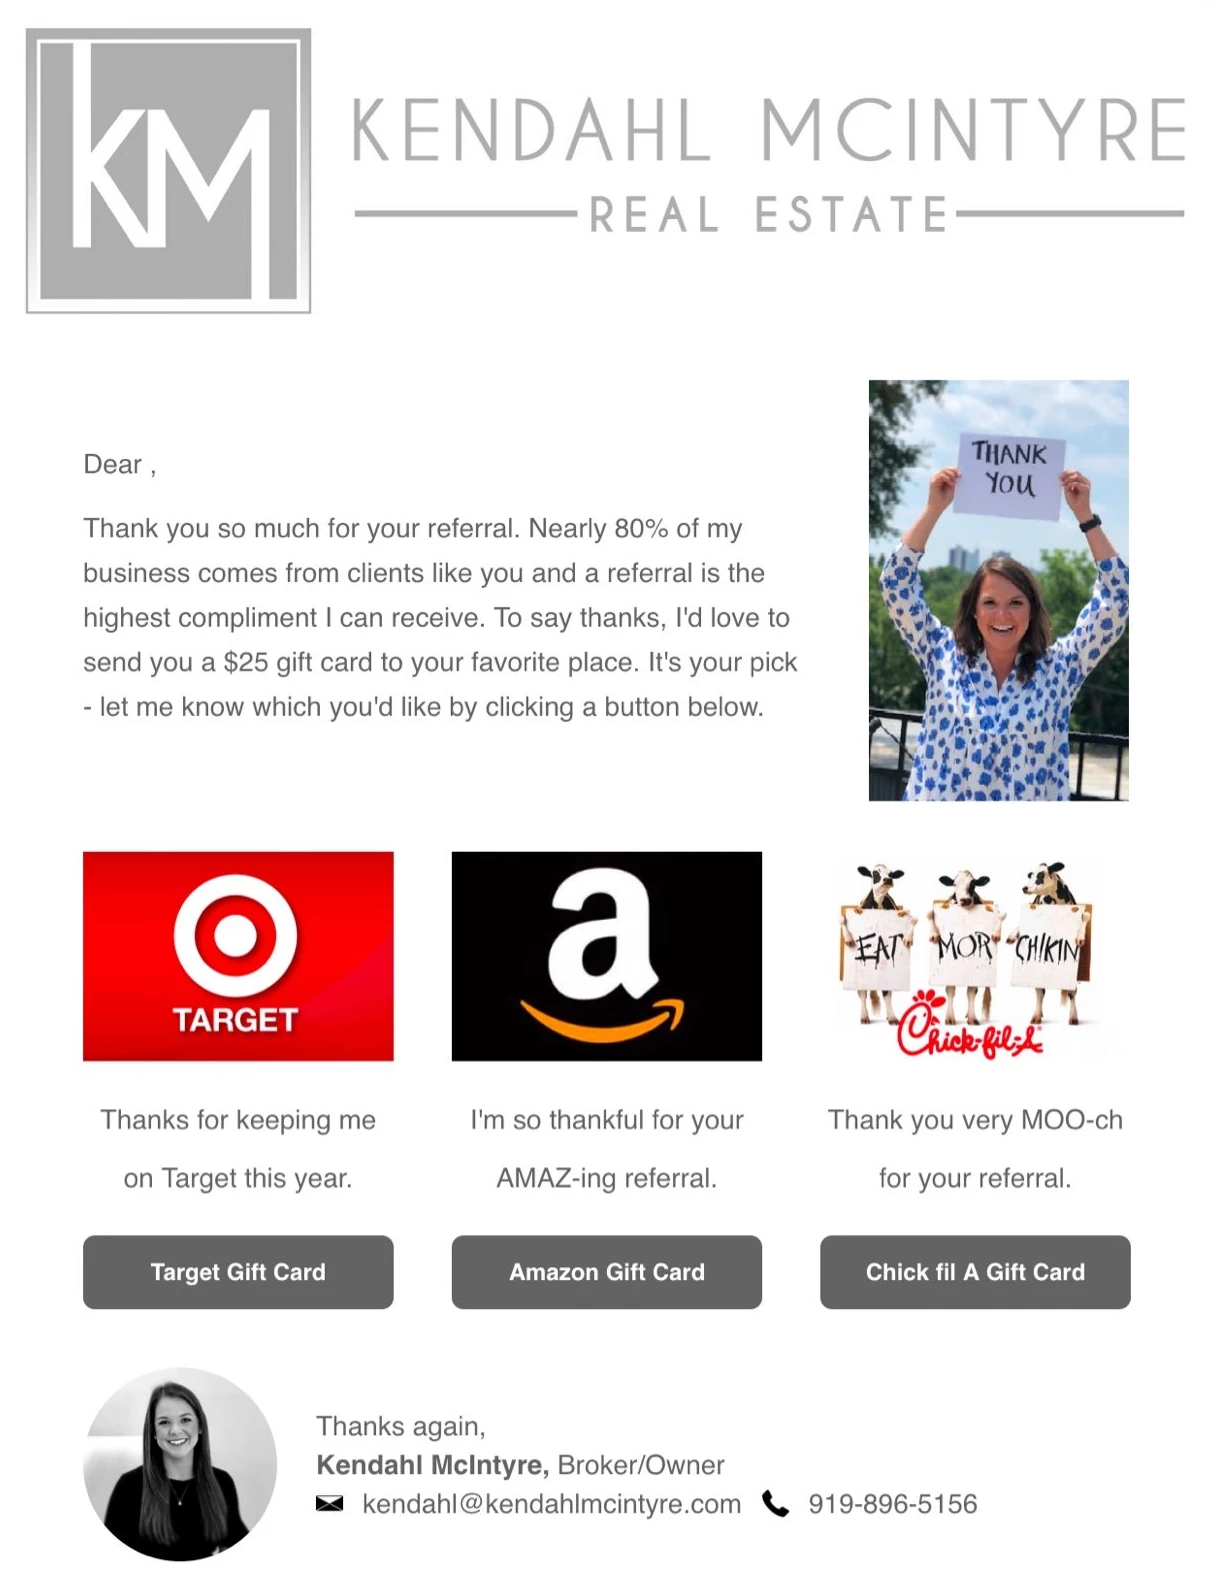 Broker Kendahl McIntyre real estate agent email example